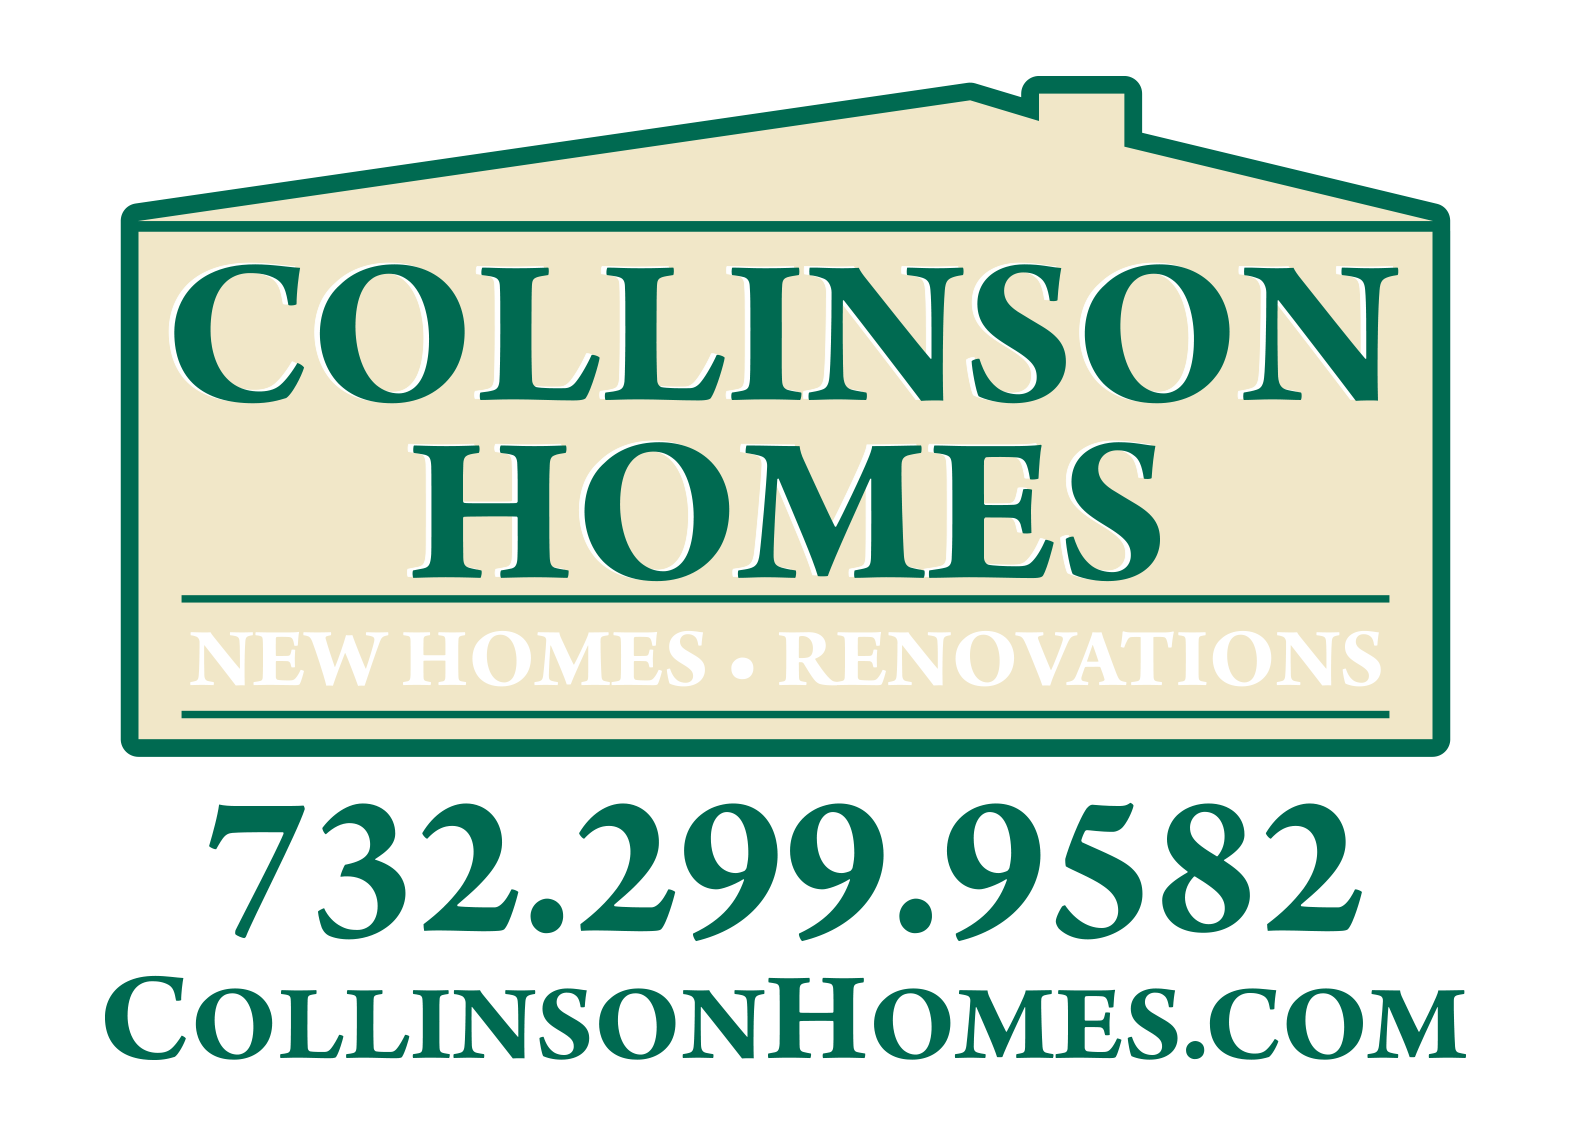 Collinson Homes